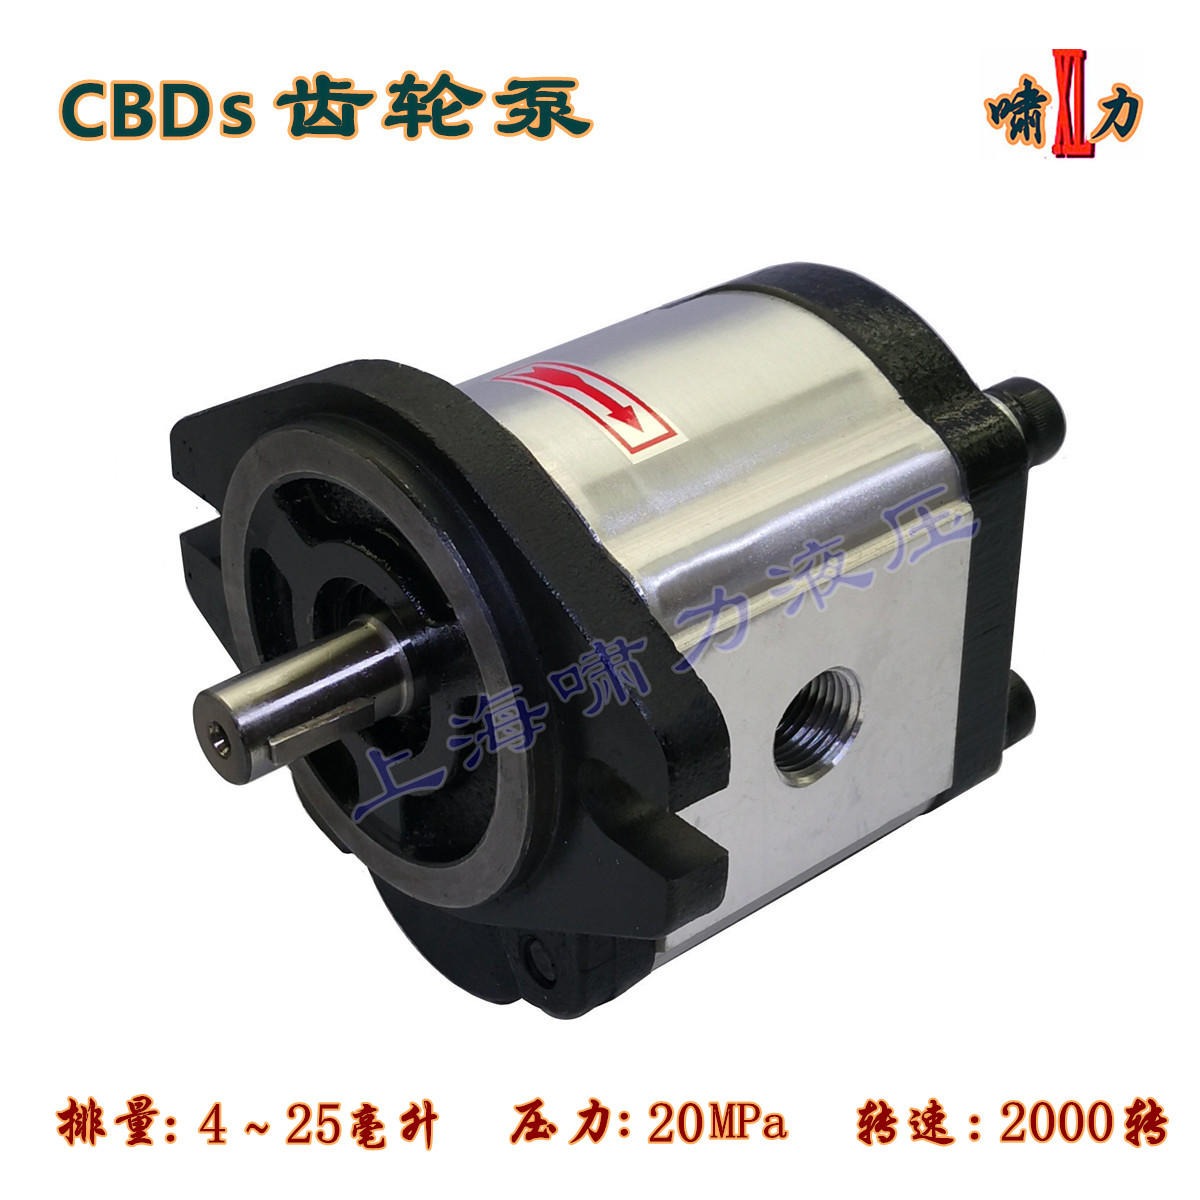 CBDS-F310 叉车齿轮泵  CBDS-F304装载机液压泵  啸力 菱形法兰齿轮泵